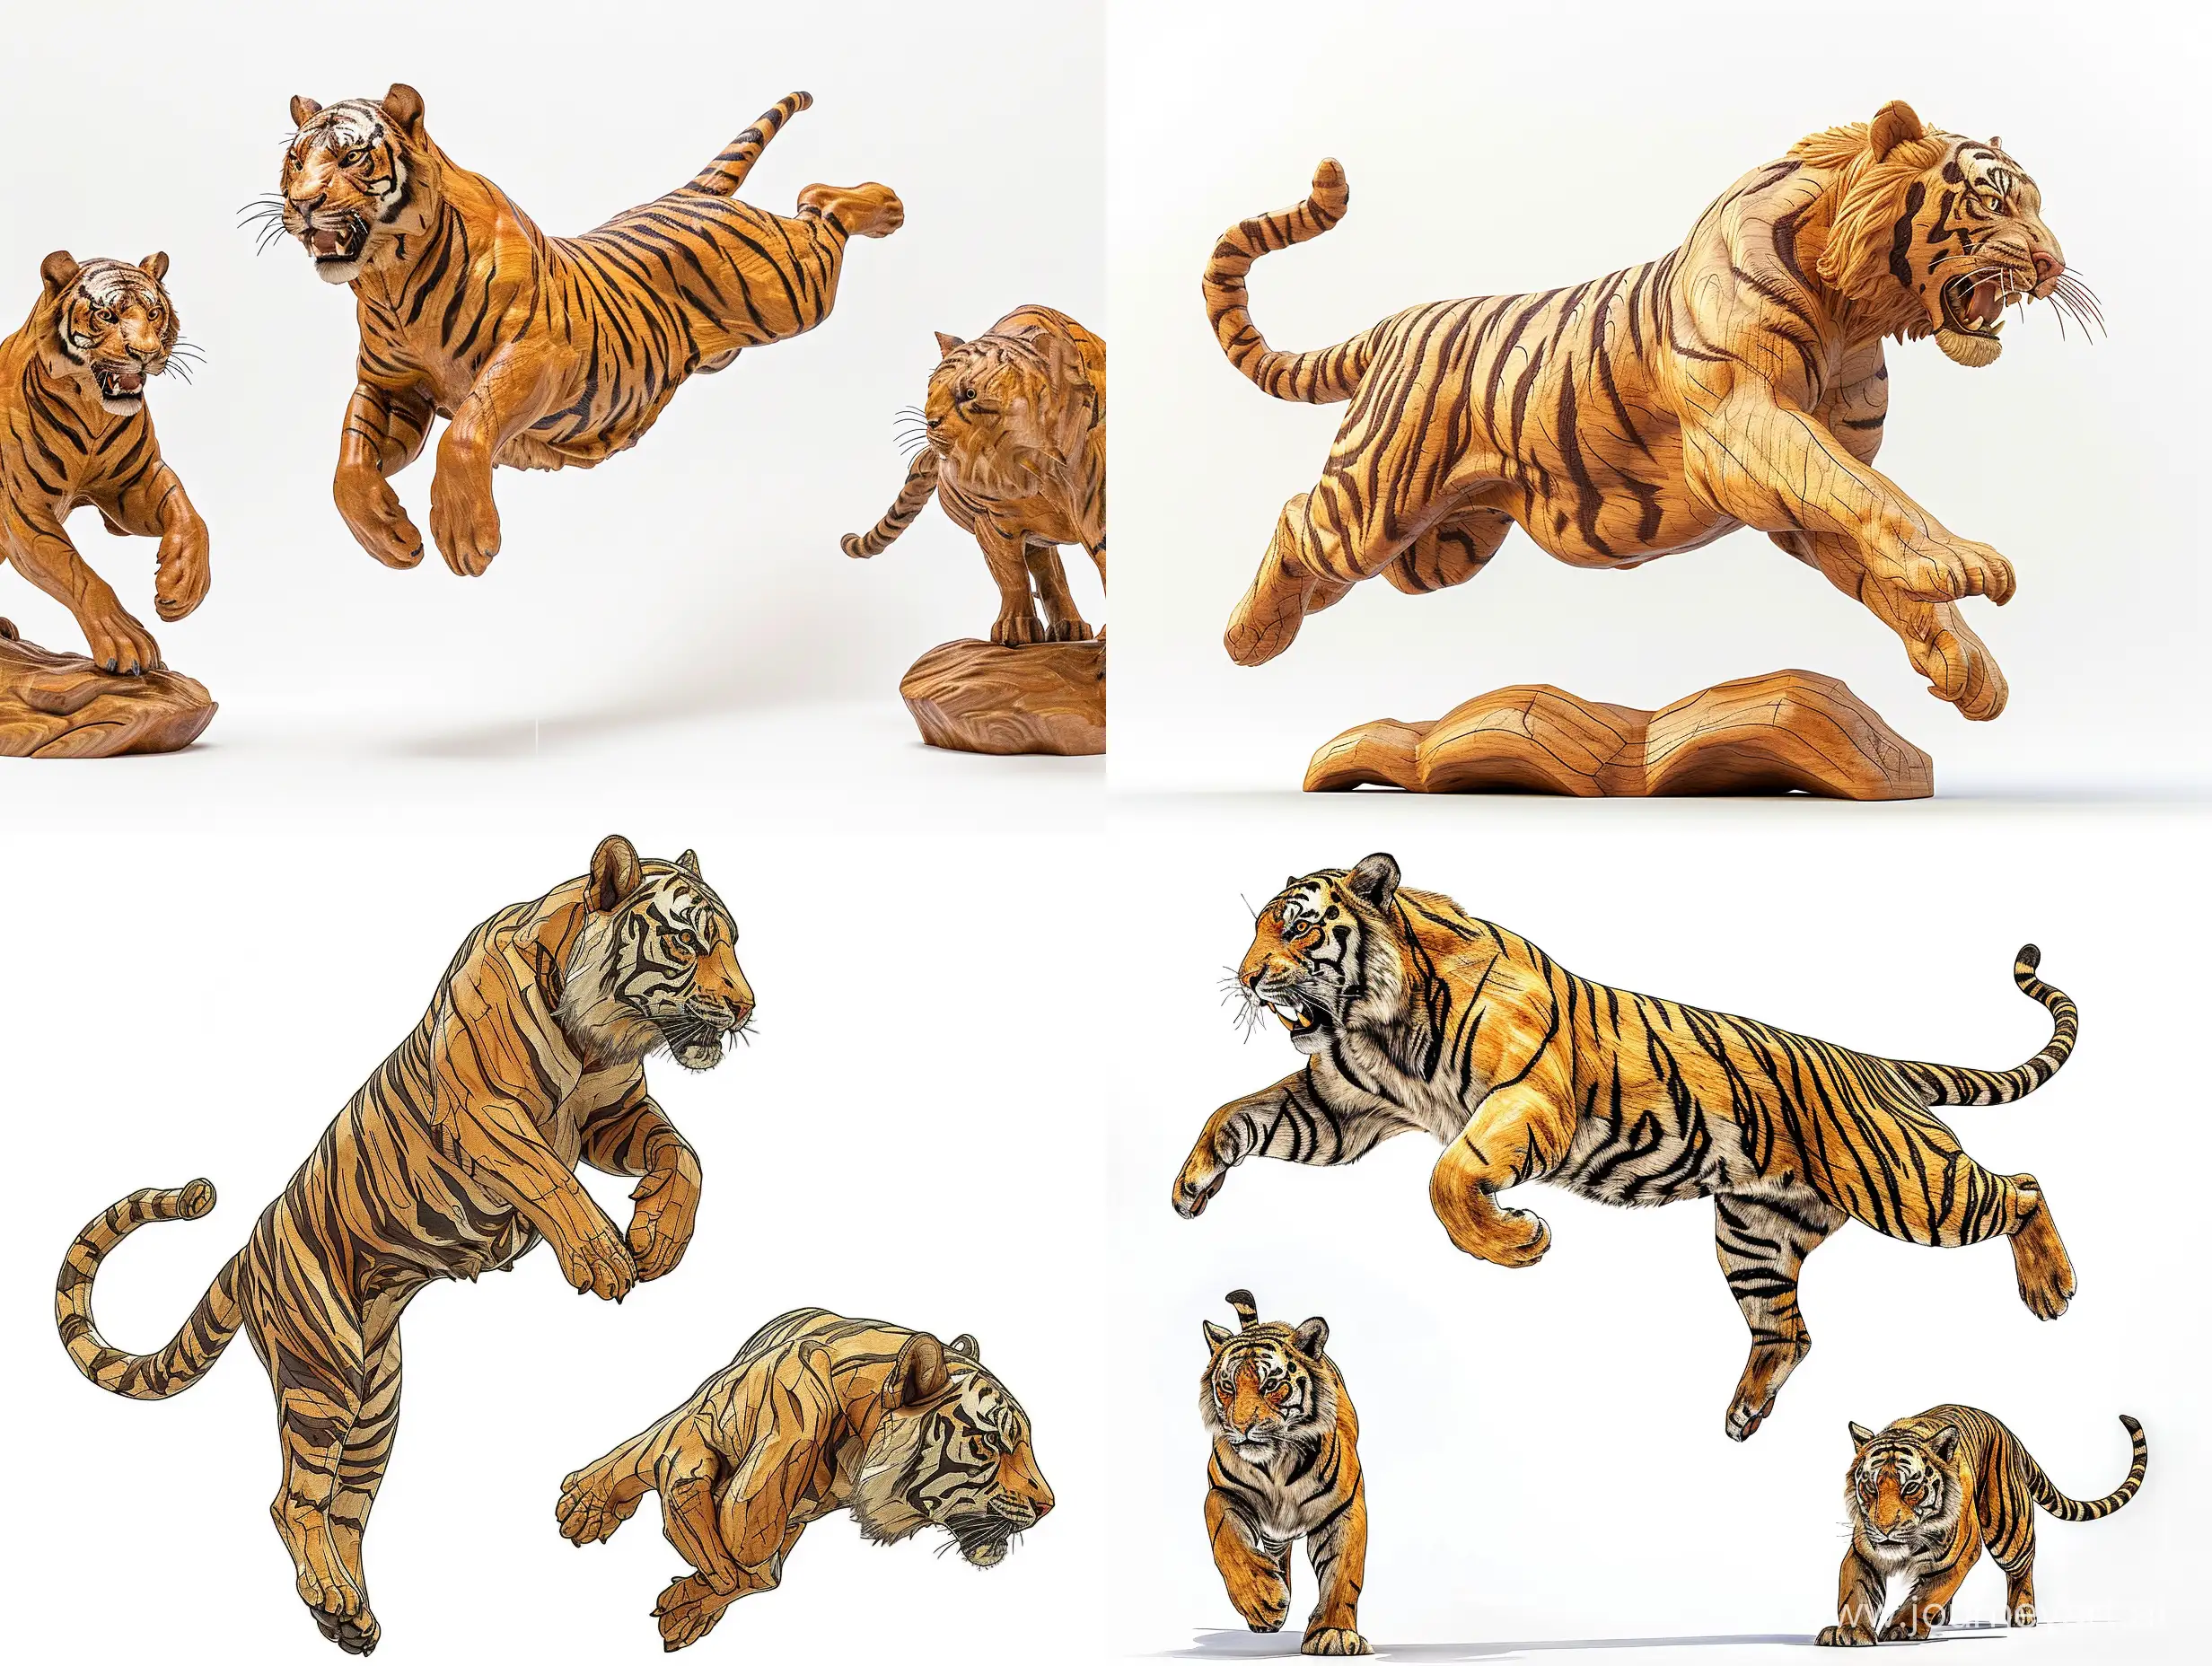 Dynamic-Tiger-Wood-Carving-Sculpture-Realistic-8K-Render